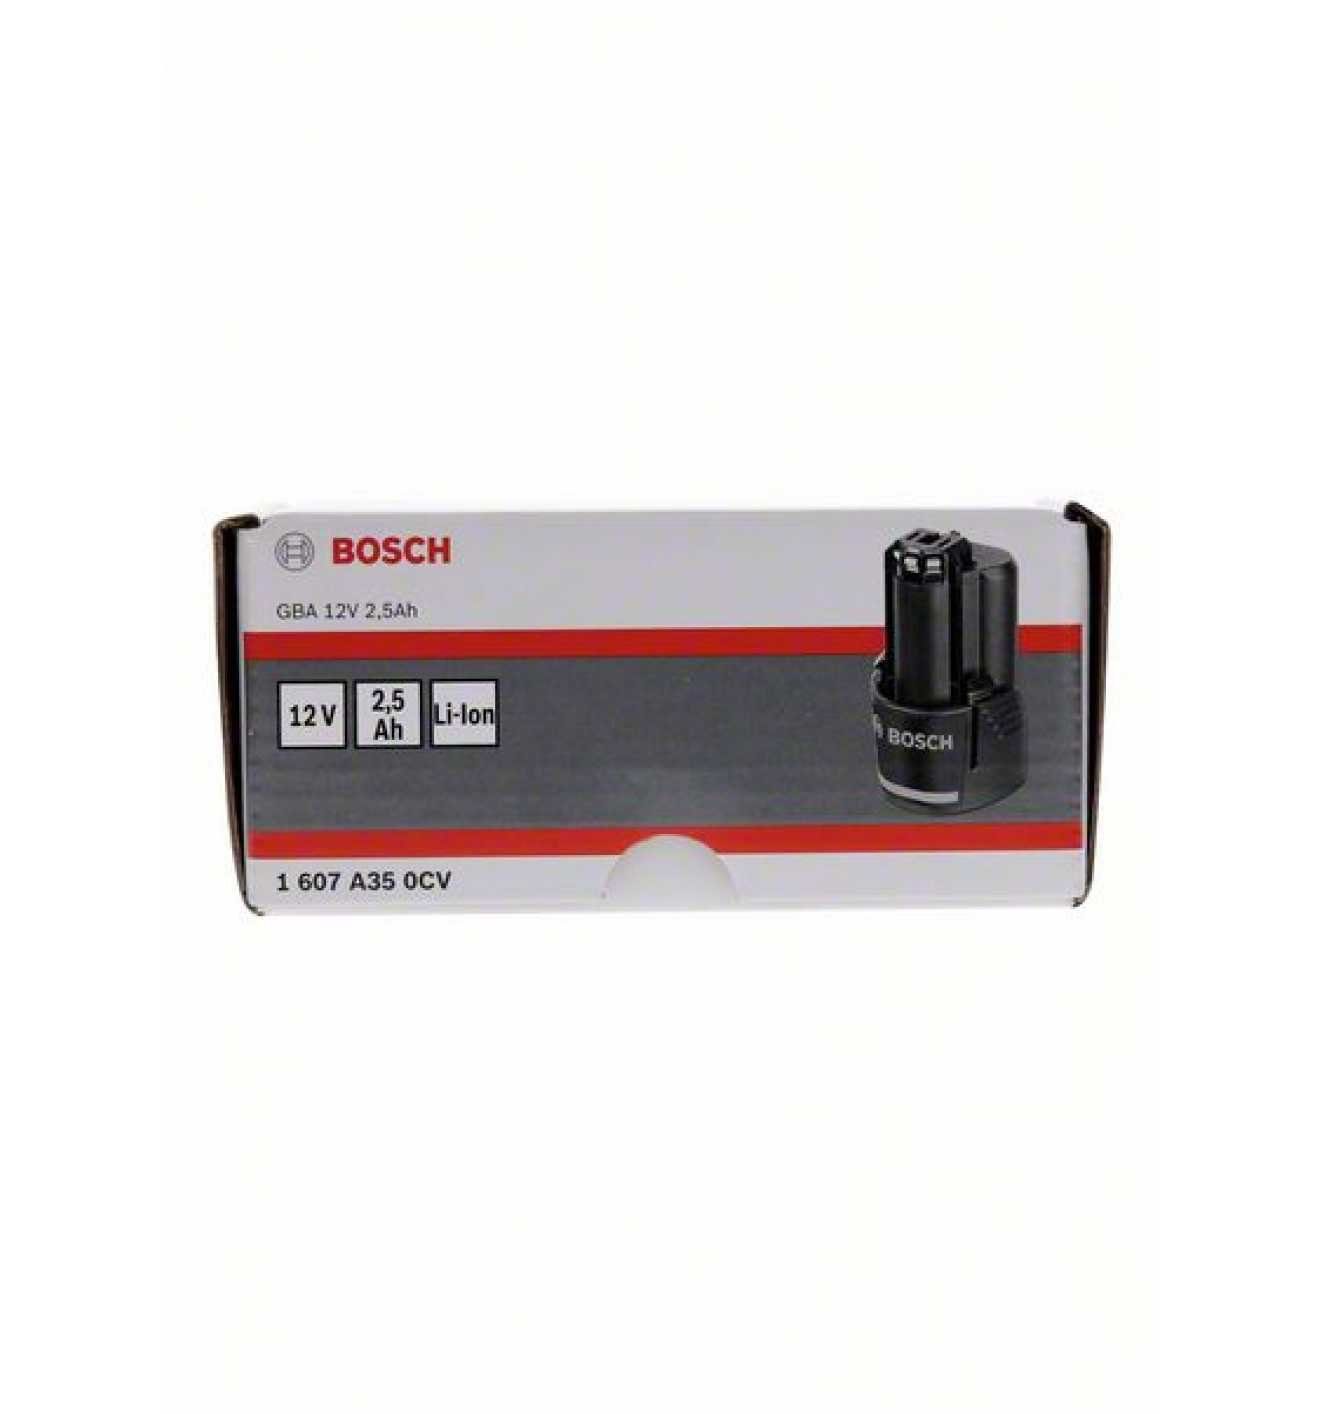 BOSCH Akkupacks GBA 2500 (12 GBA Home 2.5 V) Ah Bosch mAh GBA & 12V Garden